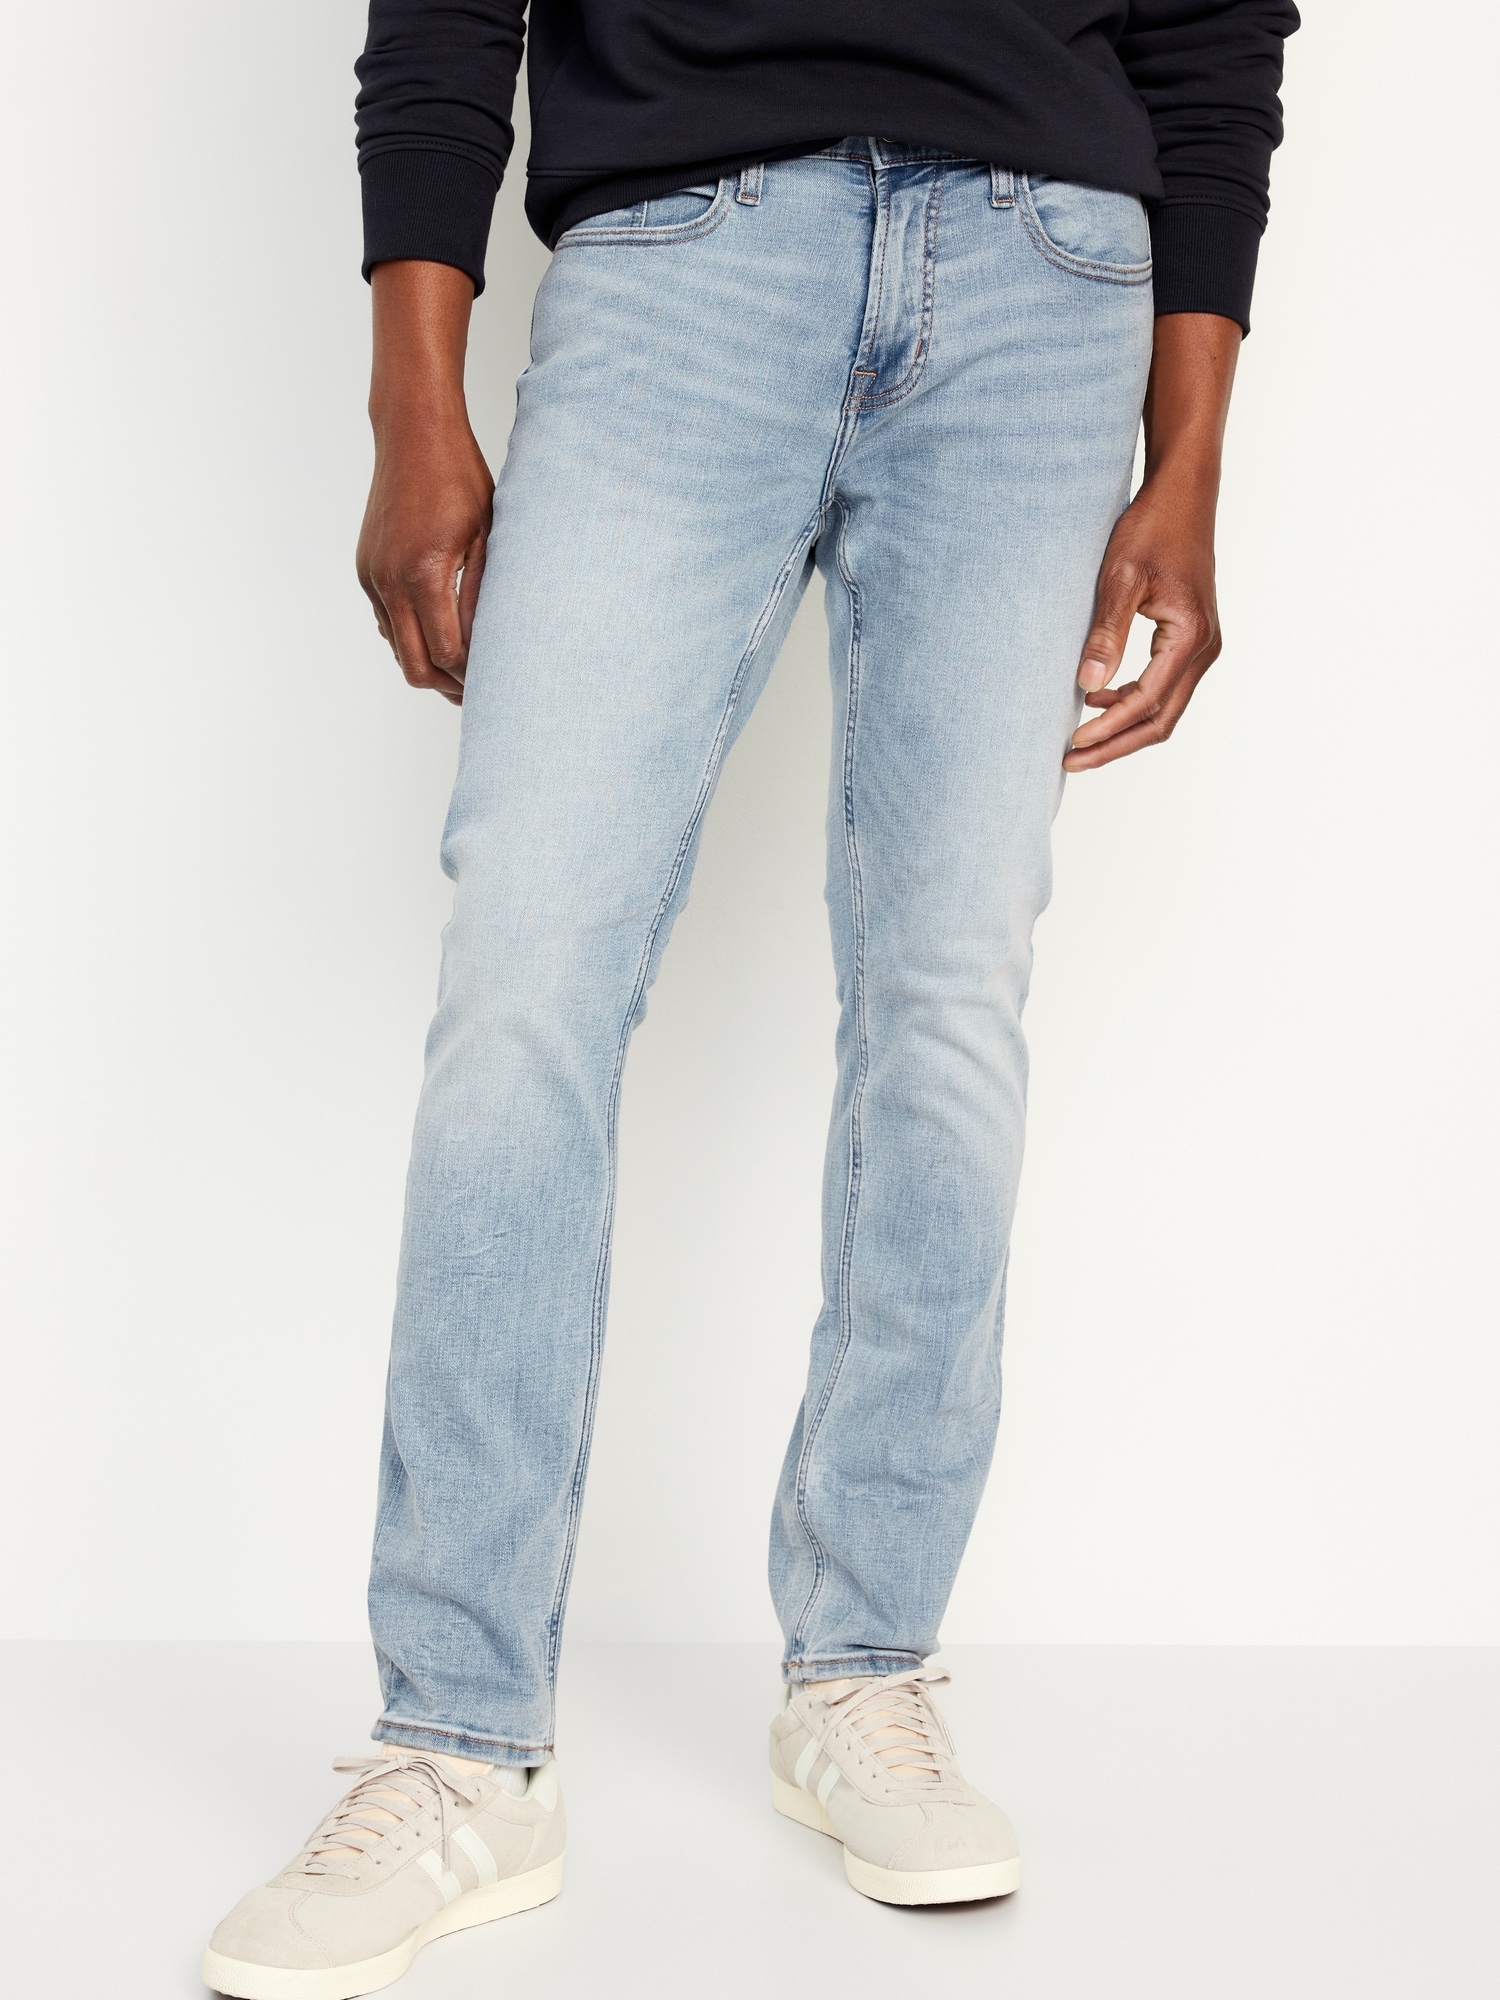 Men's Old Navy Slim Etroit Denim Blue Jeans Size 38 X 32